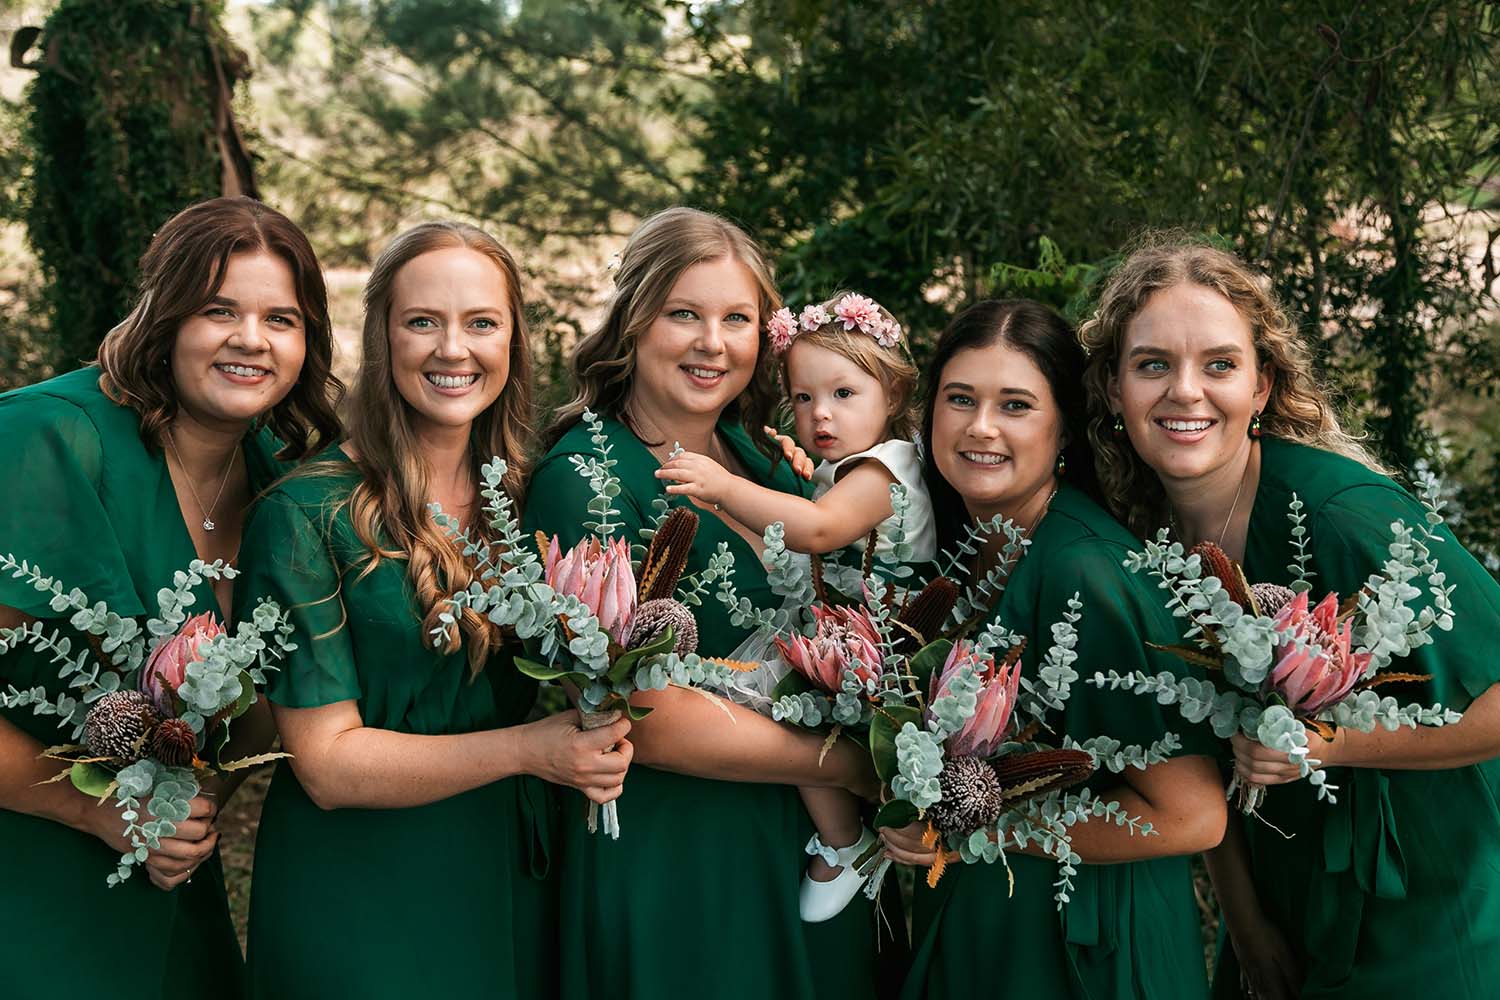 Wedding Photography - bridesmaids together